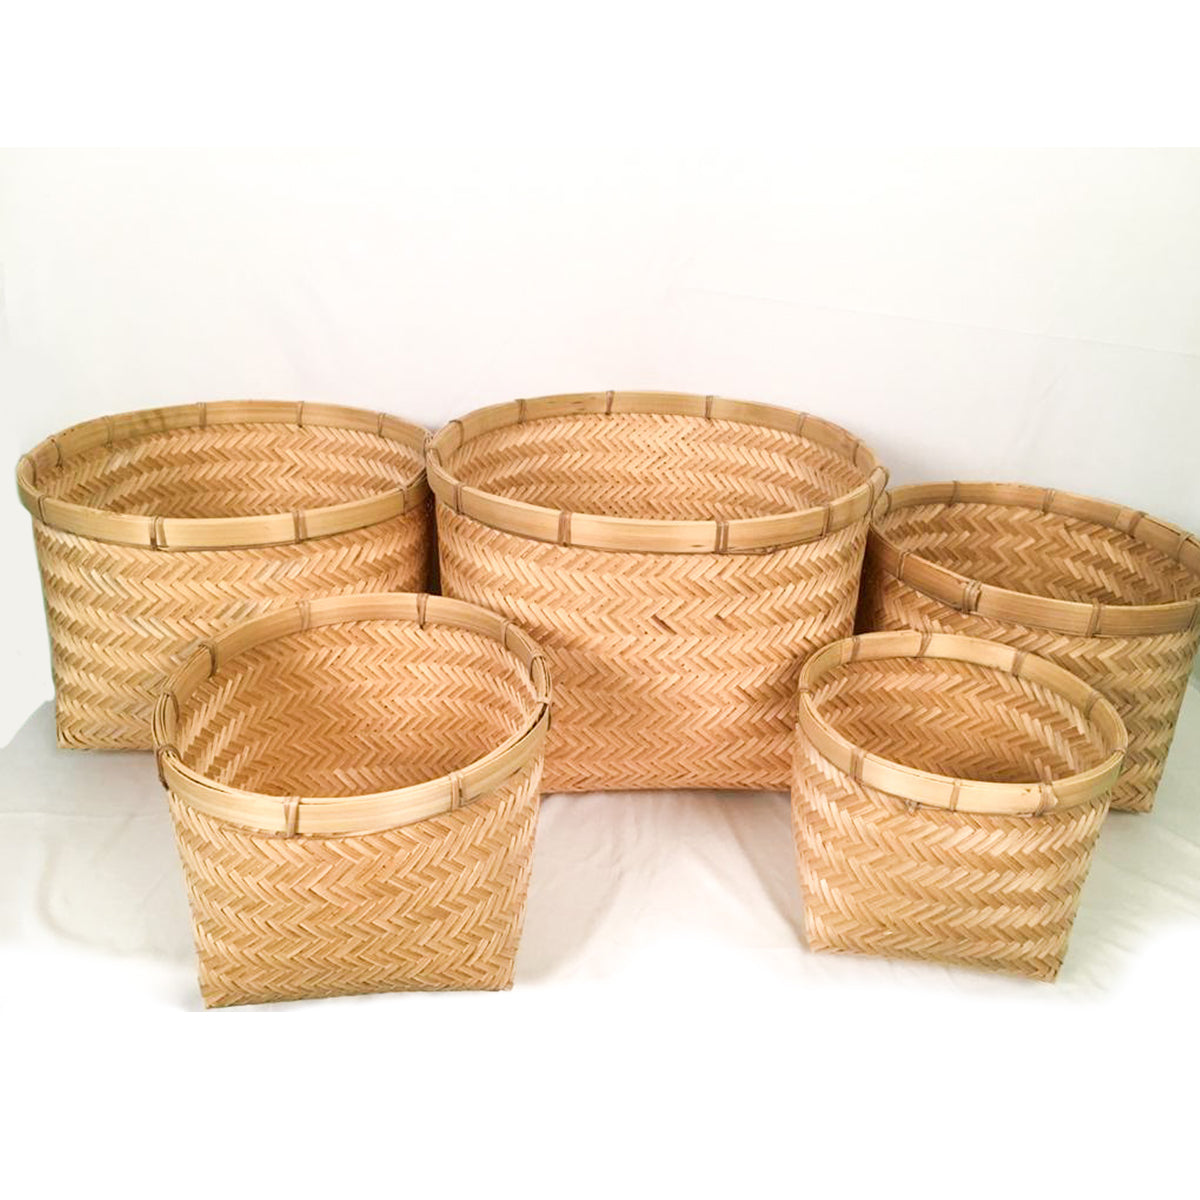 Bamboo Storage Baskets with Binding Rim - Set of 5